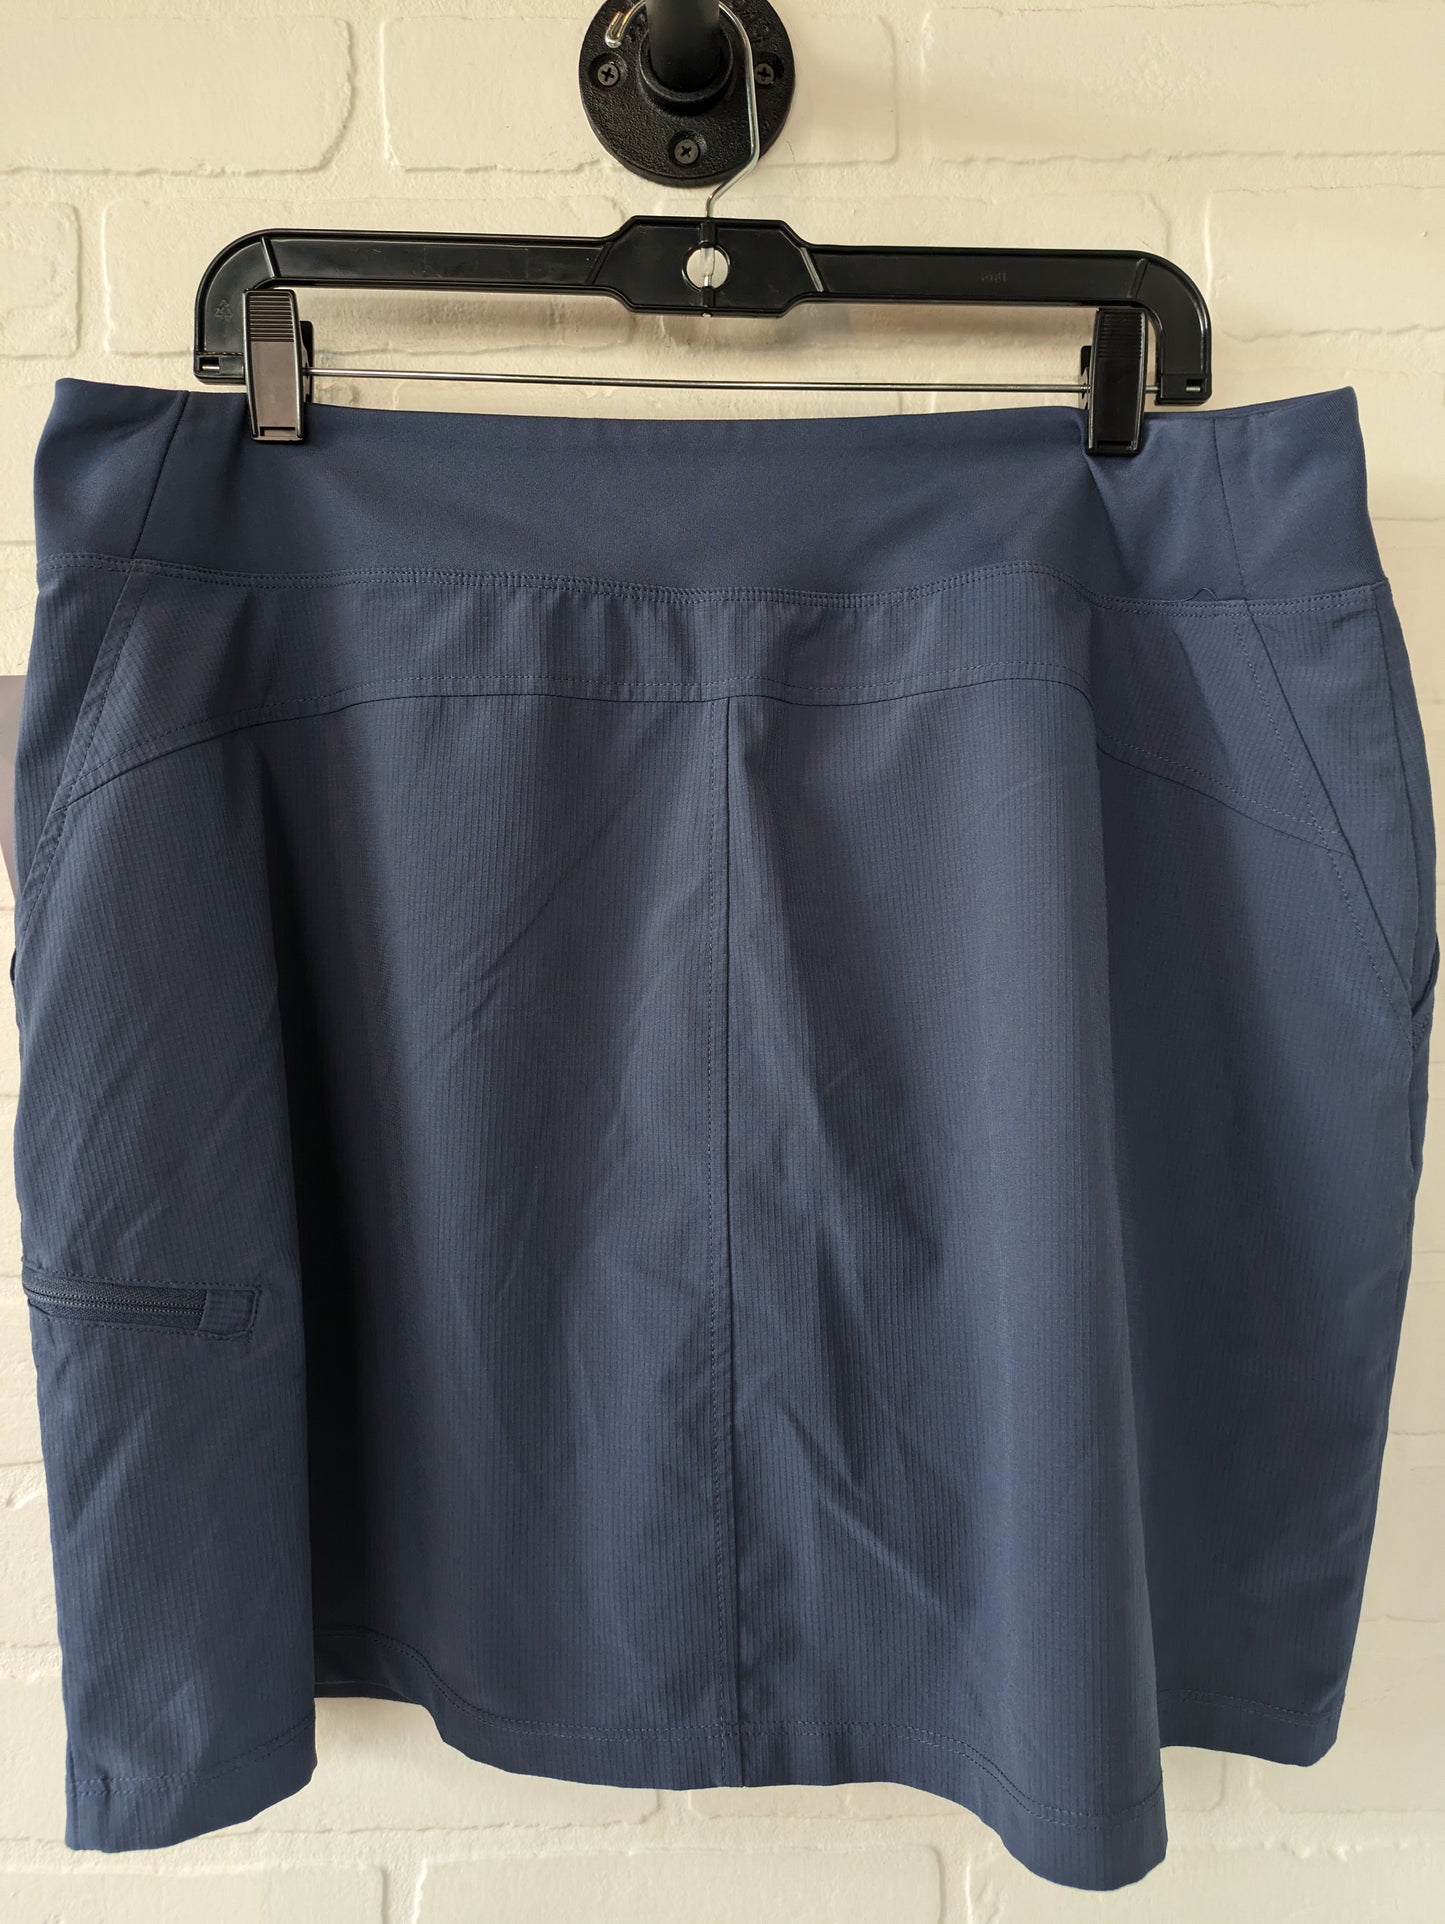 Athletic Skirt Skort By Orvis  Size: 18